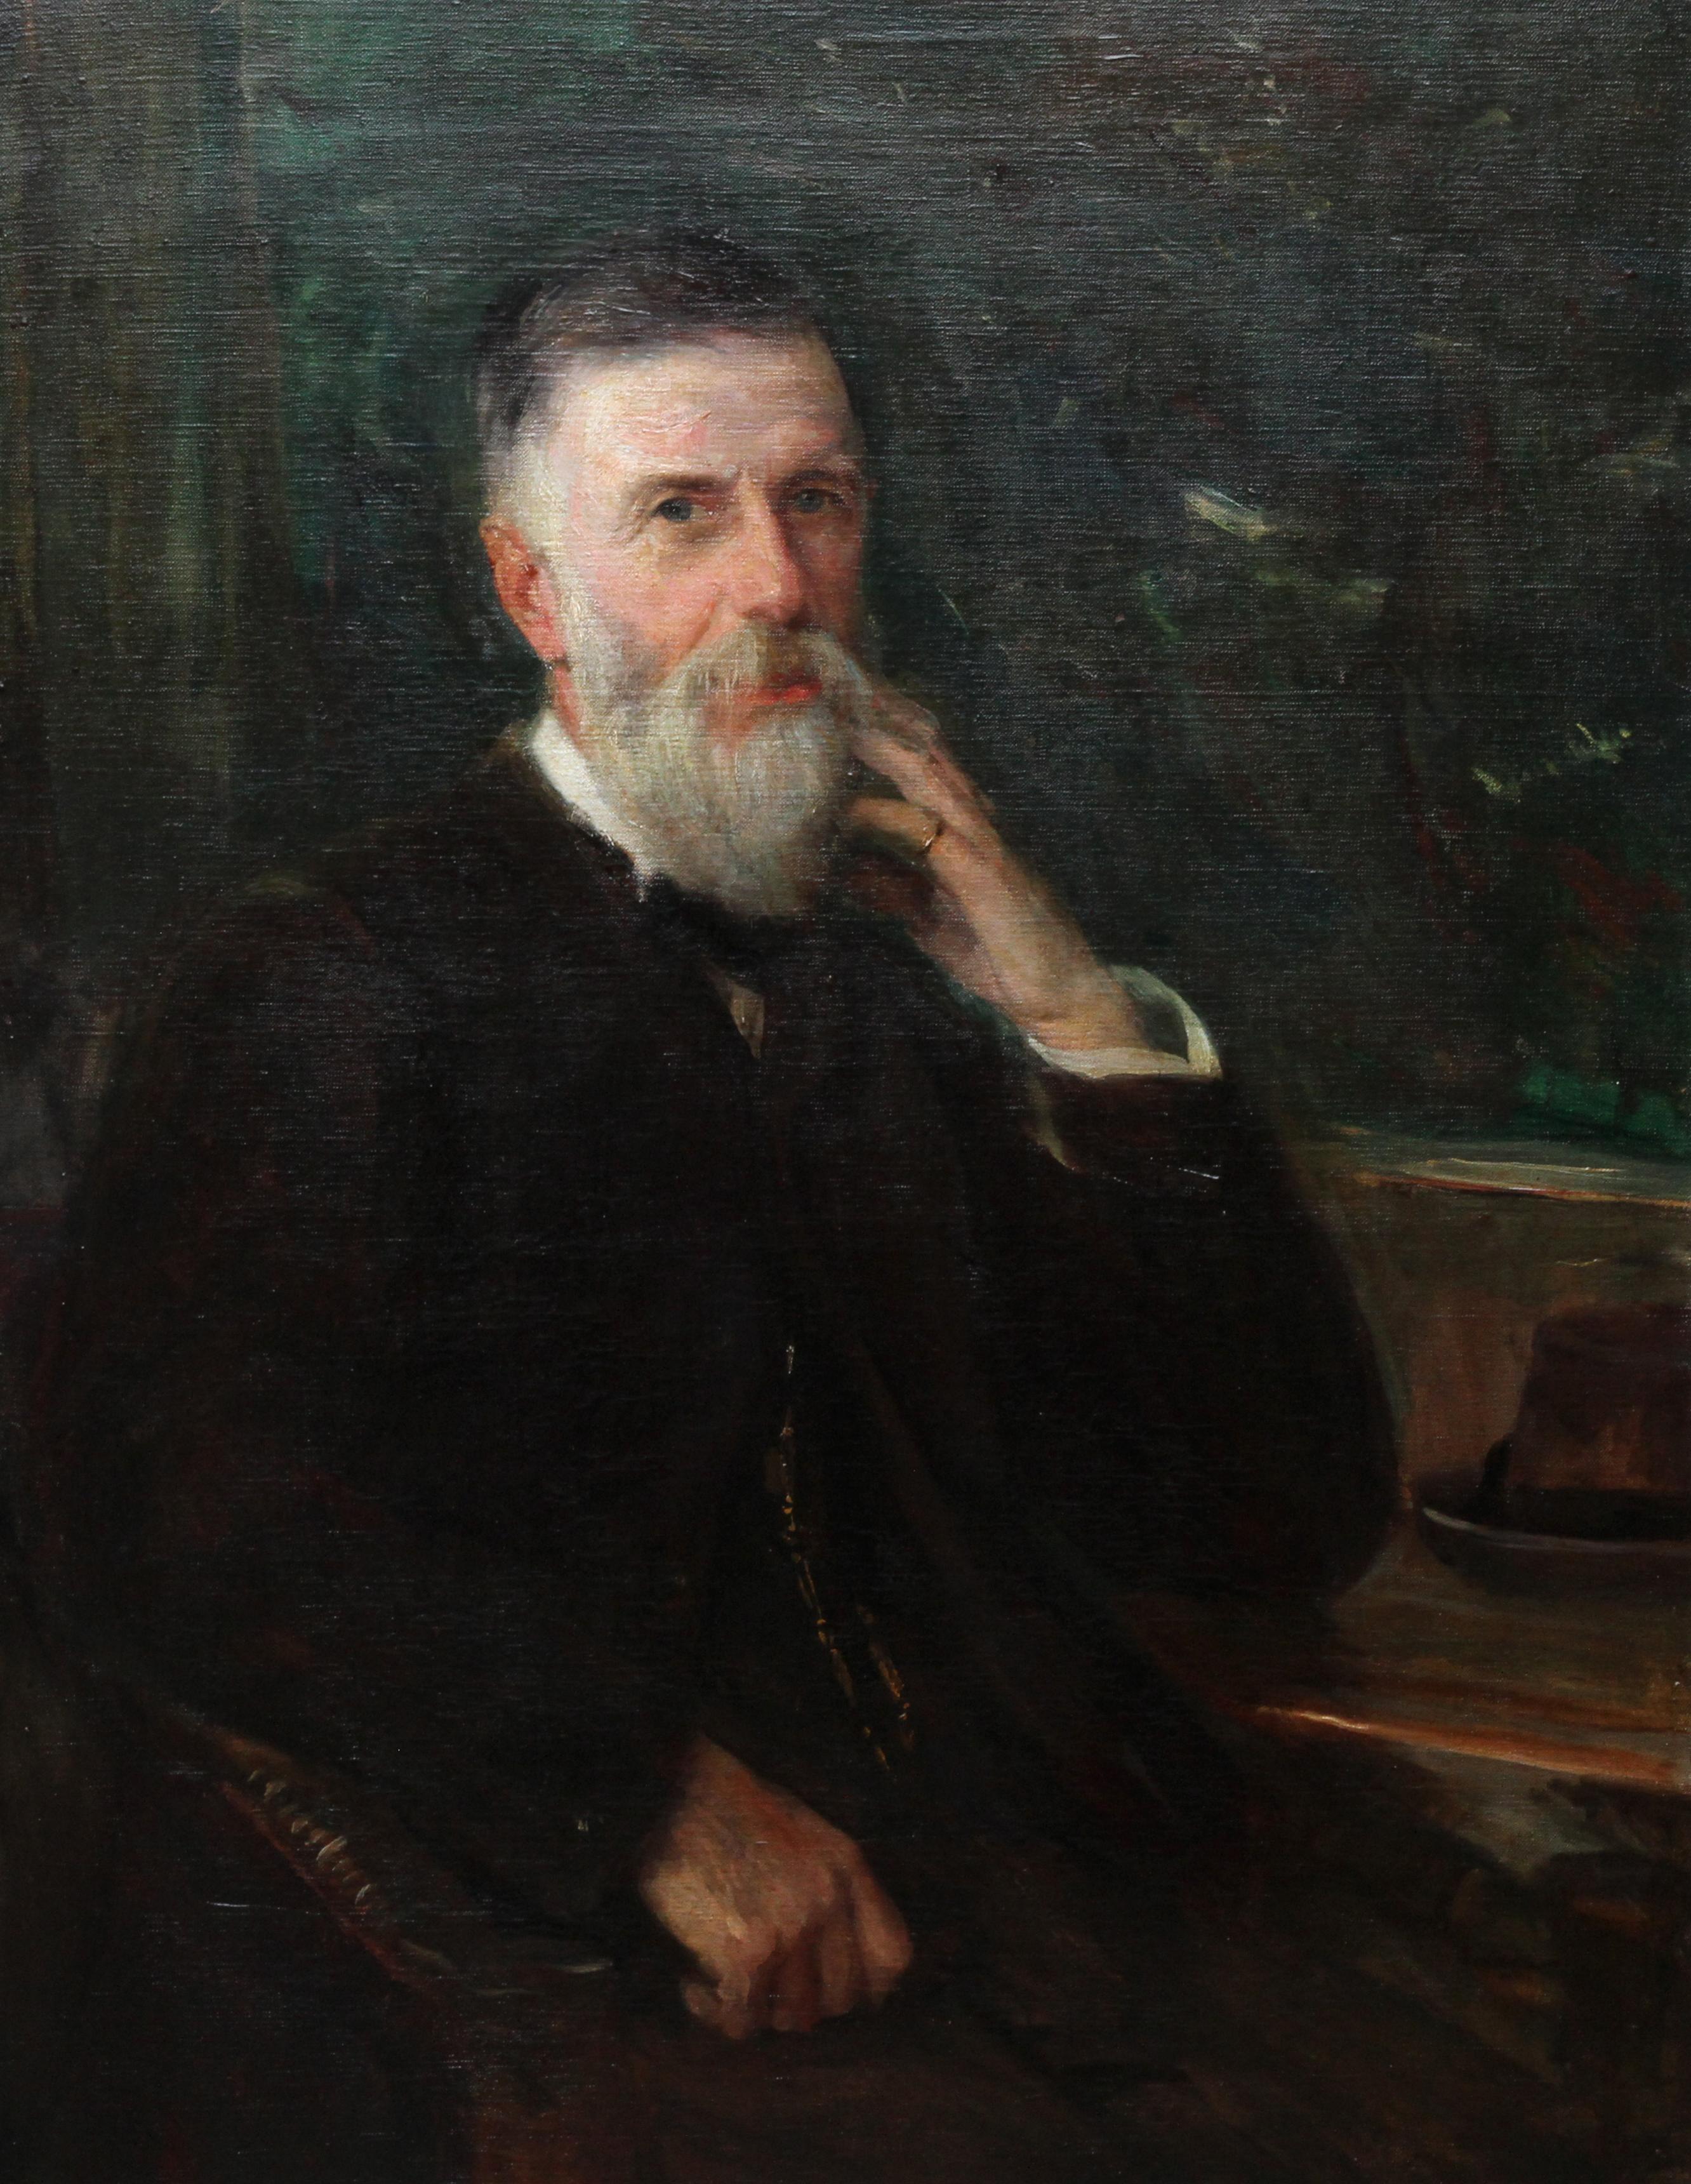 Portrait of William Broom - Scottish Edwardian art male portrait oil painting 6